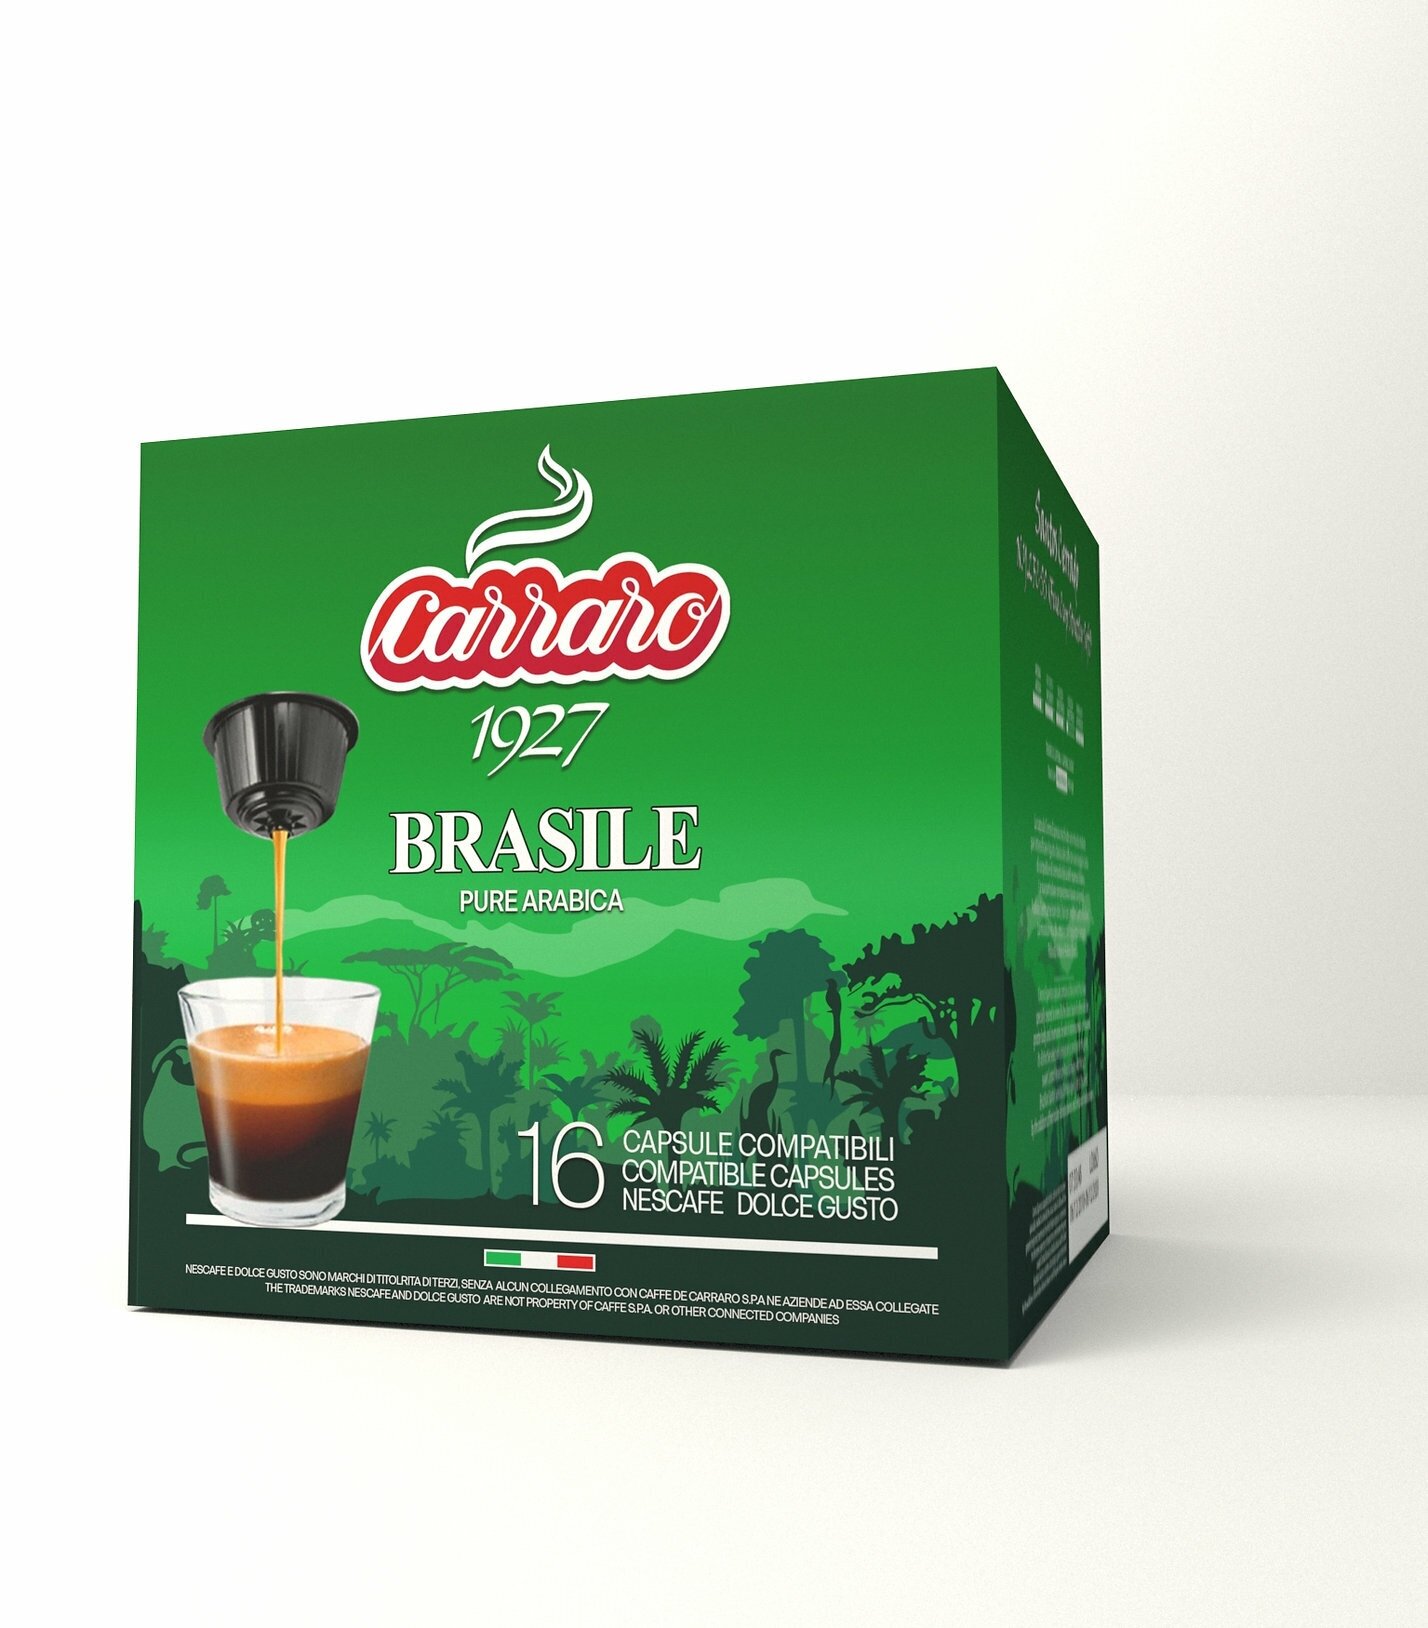 Кофе в капсулах Carraro Brasile, для Dolce Gusto, 16 шт